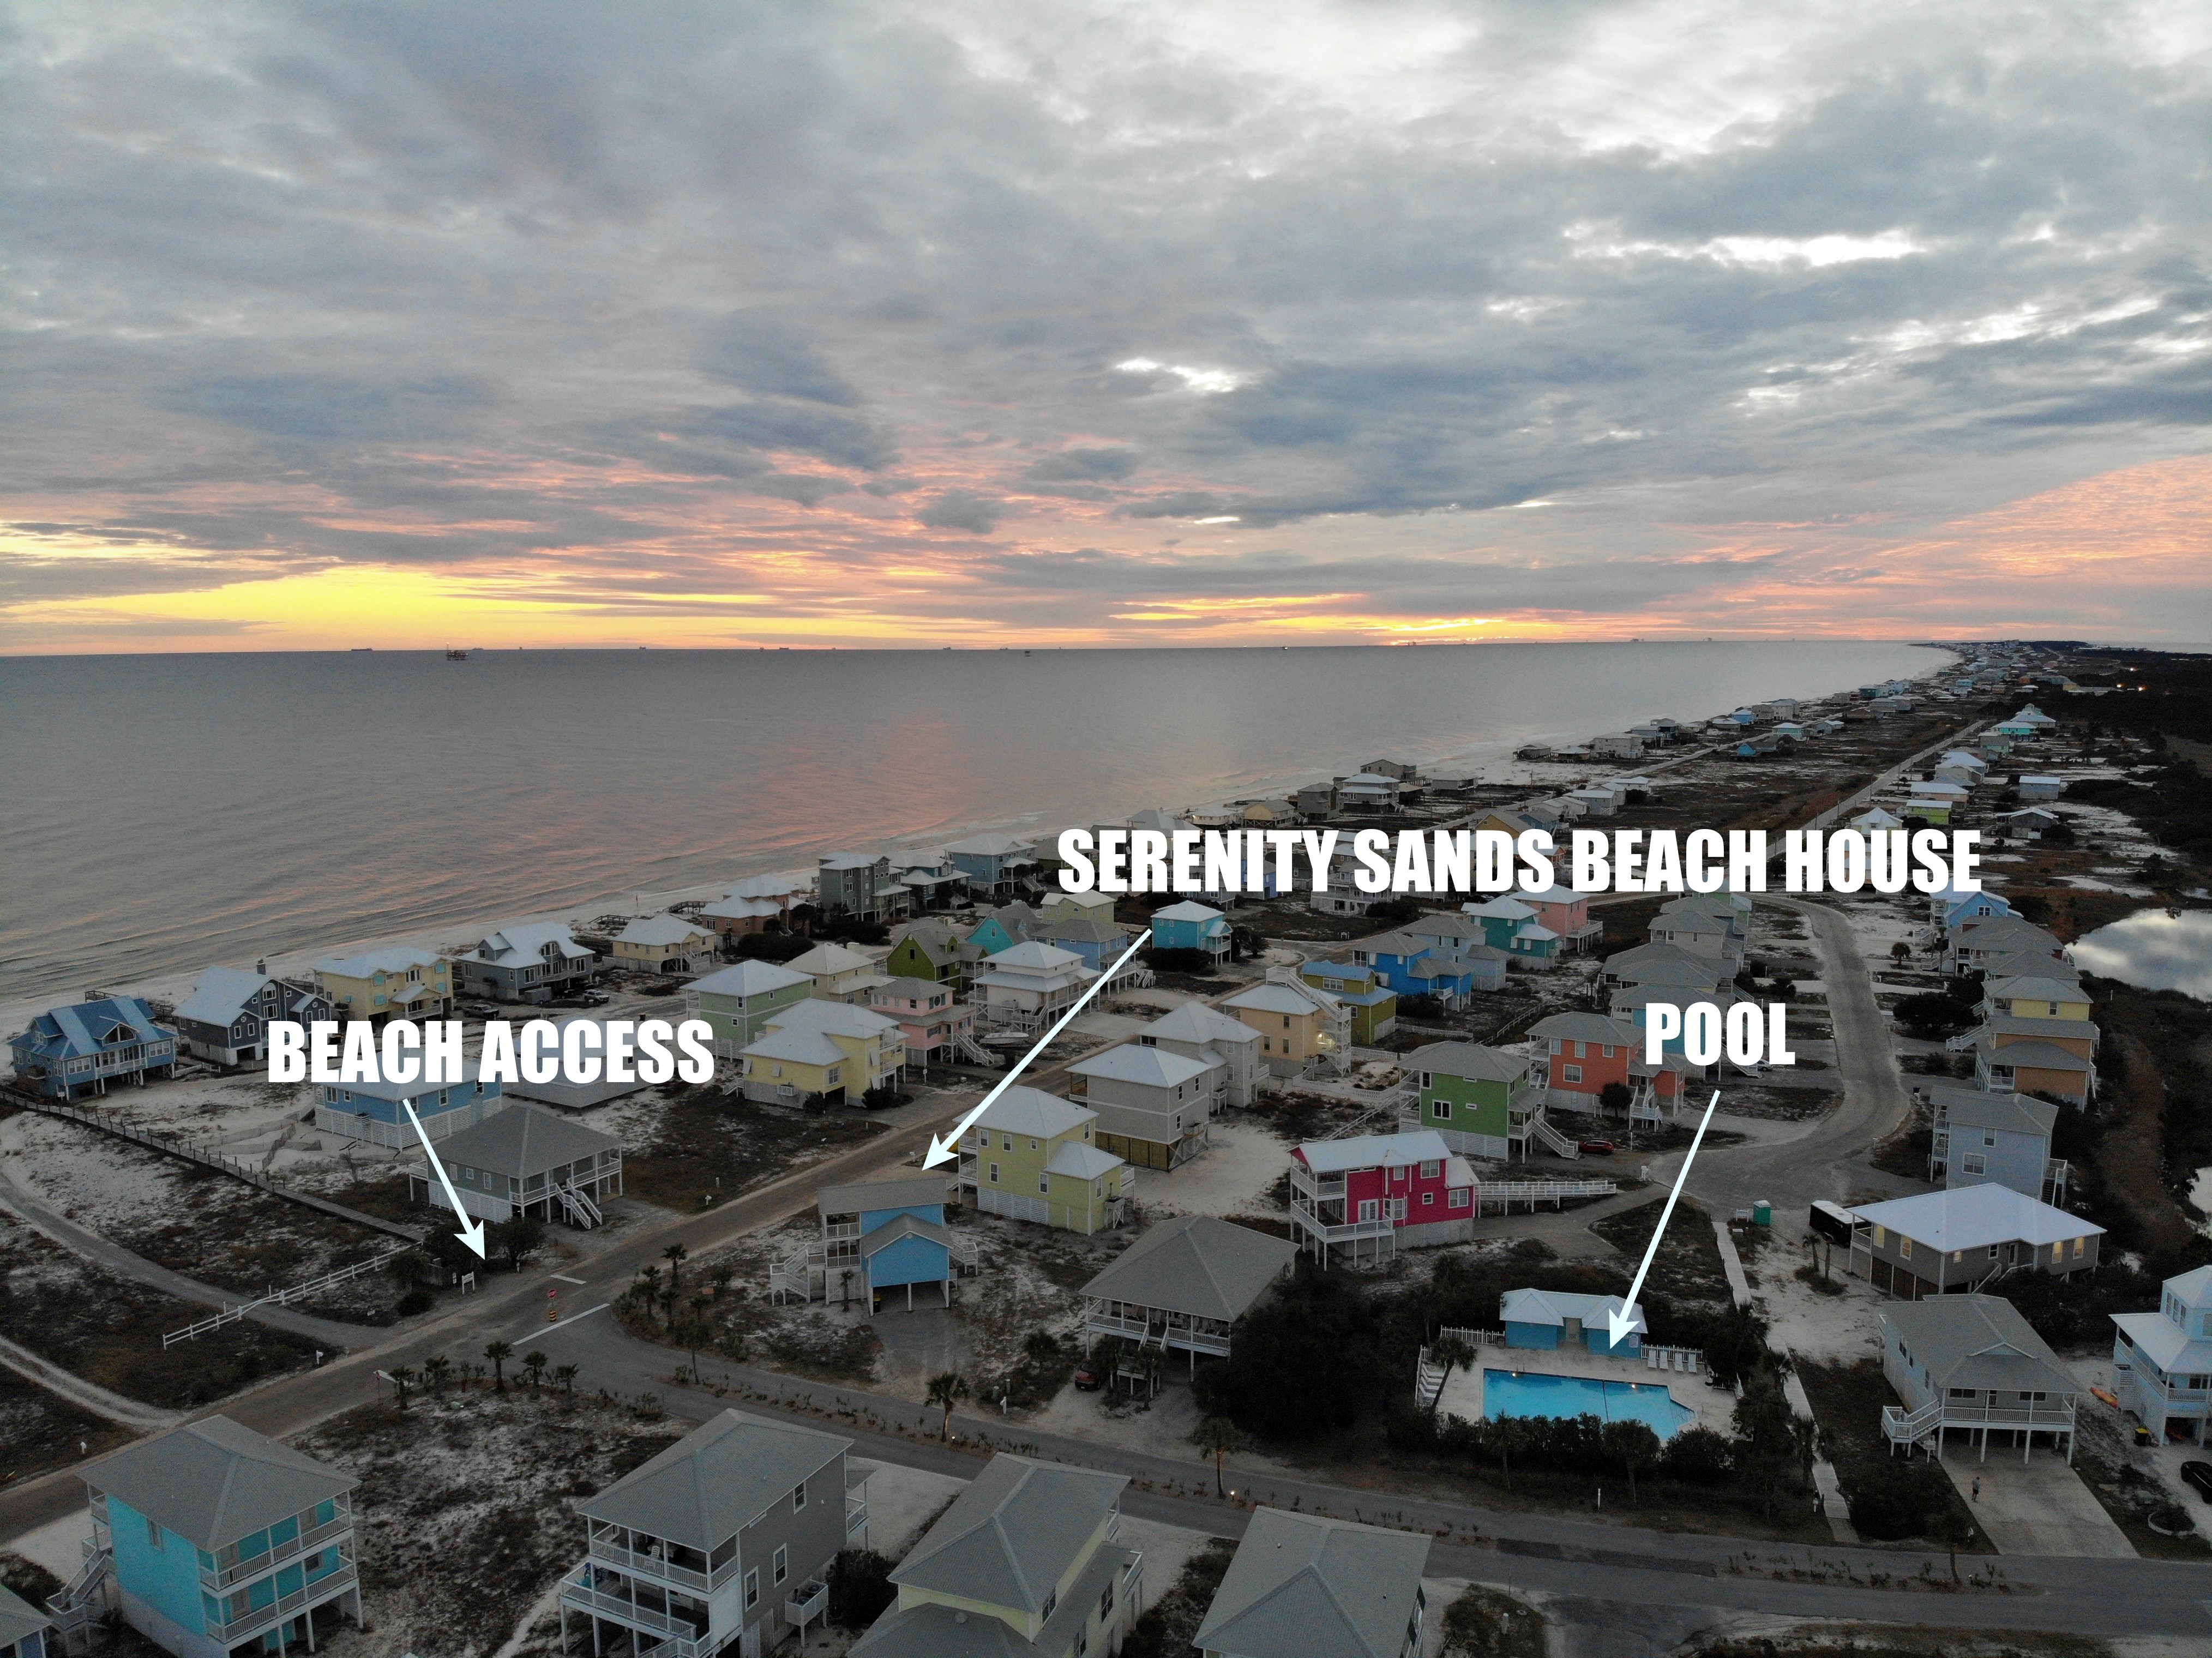 https://alabama-travel.s3.amazonaws.com/partners-uploads/photo/image/5edadf2f707f3b00071e252e/aerial view of sunset over Serenity Sands Beach House, beach boardwalk and pool.jpg